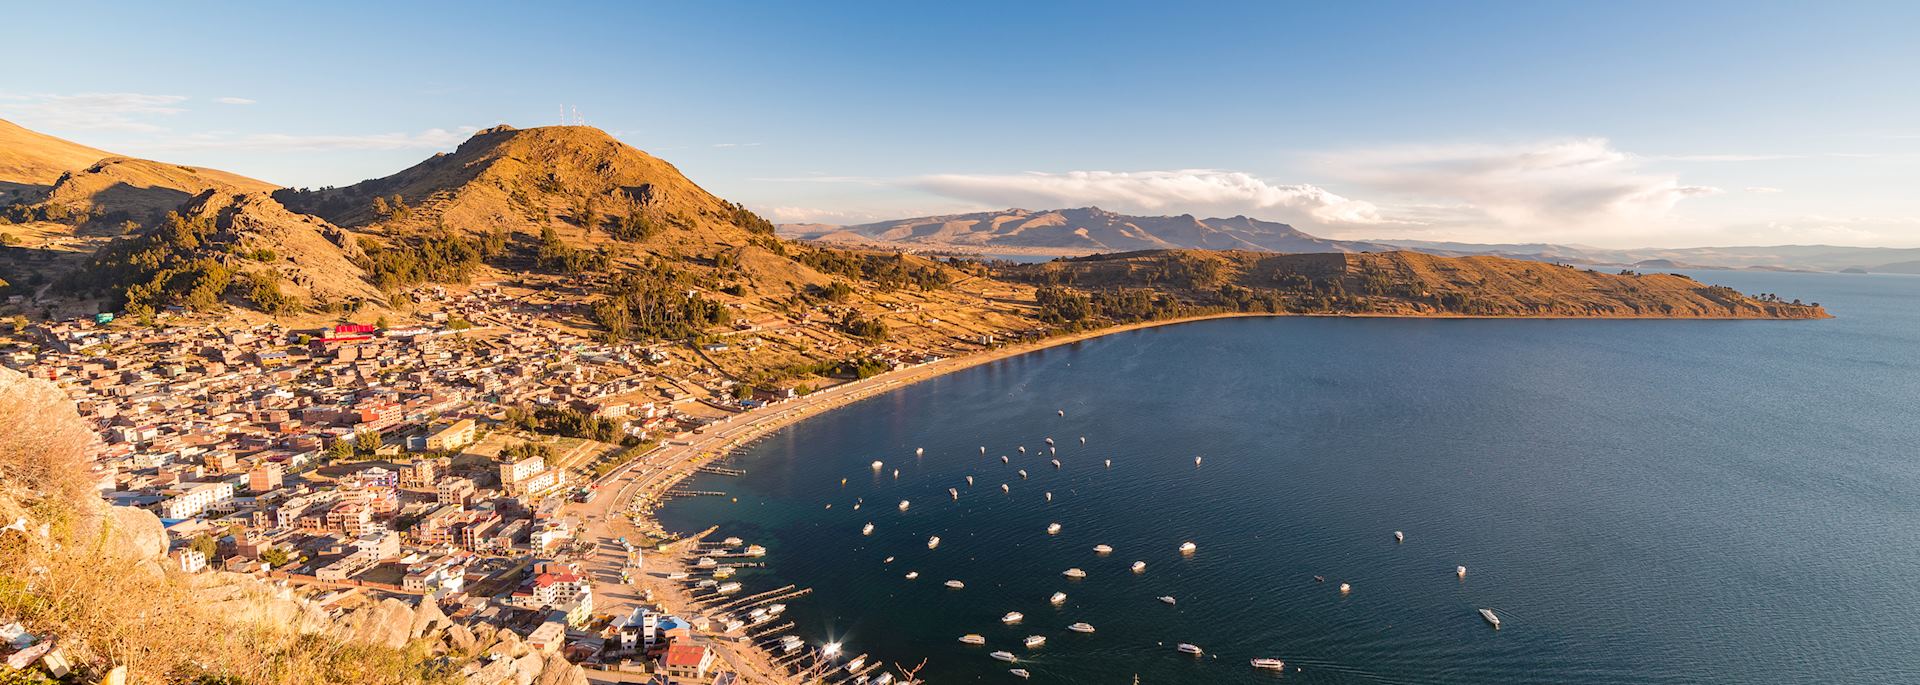 Sun Island, Lake Titicaca